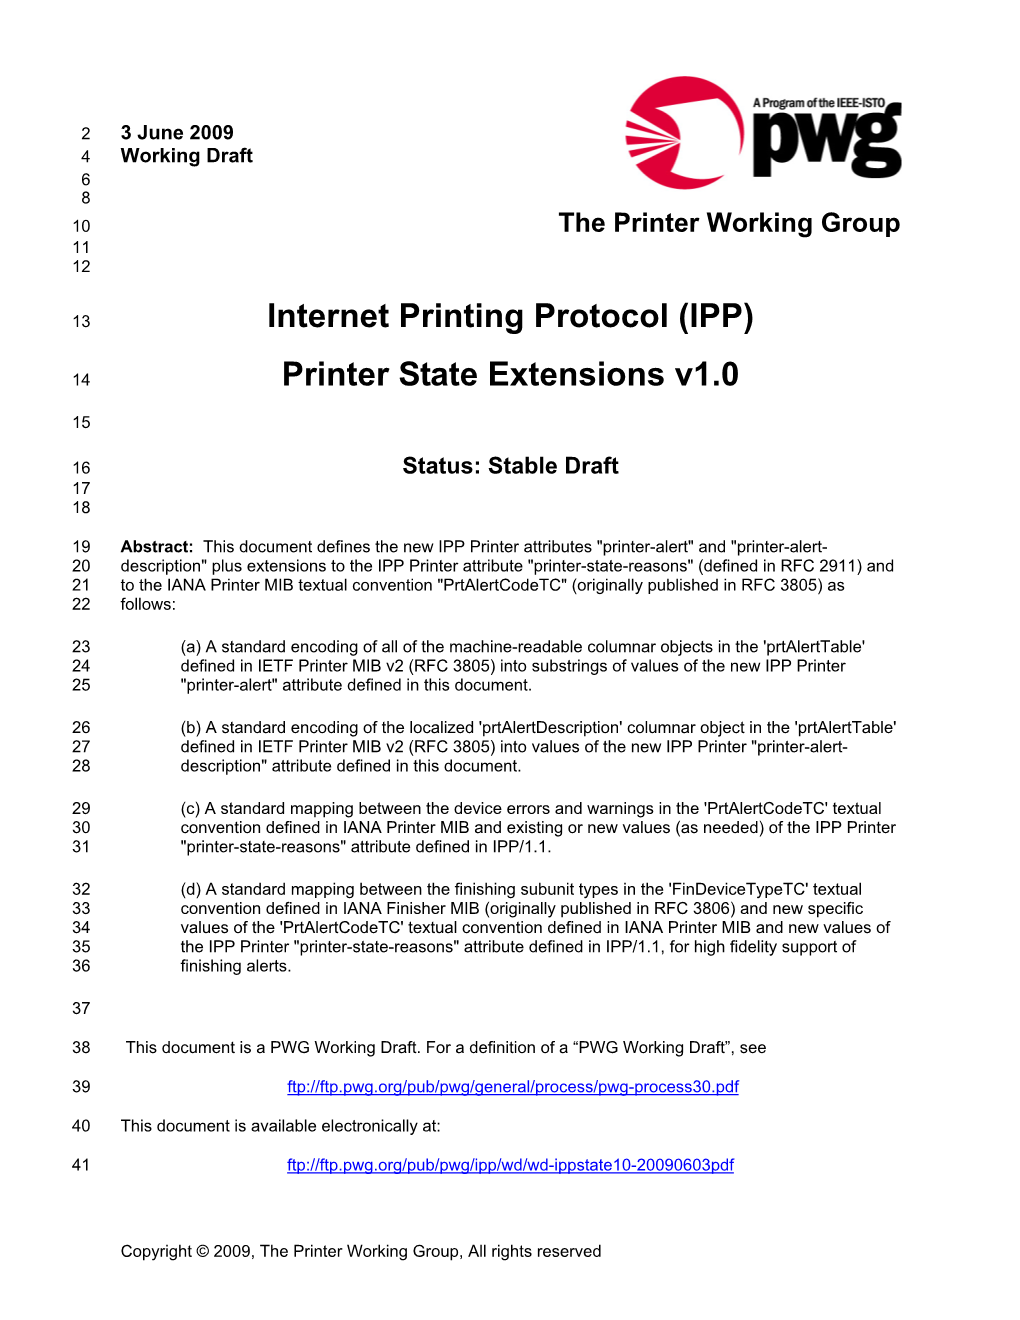 Internet Printing Protocol (IPP) Printer State Extensions V1.0